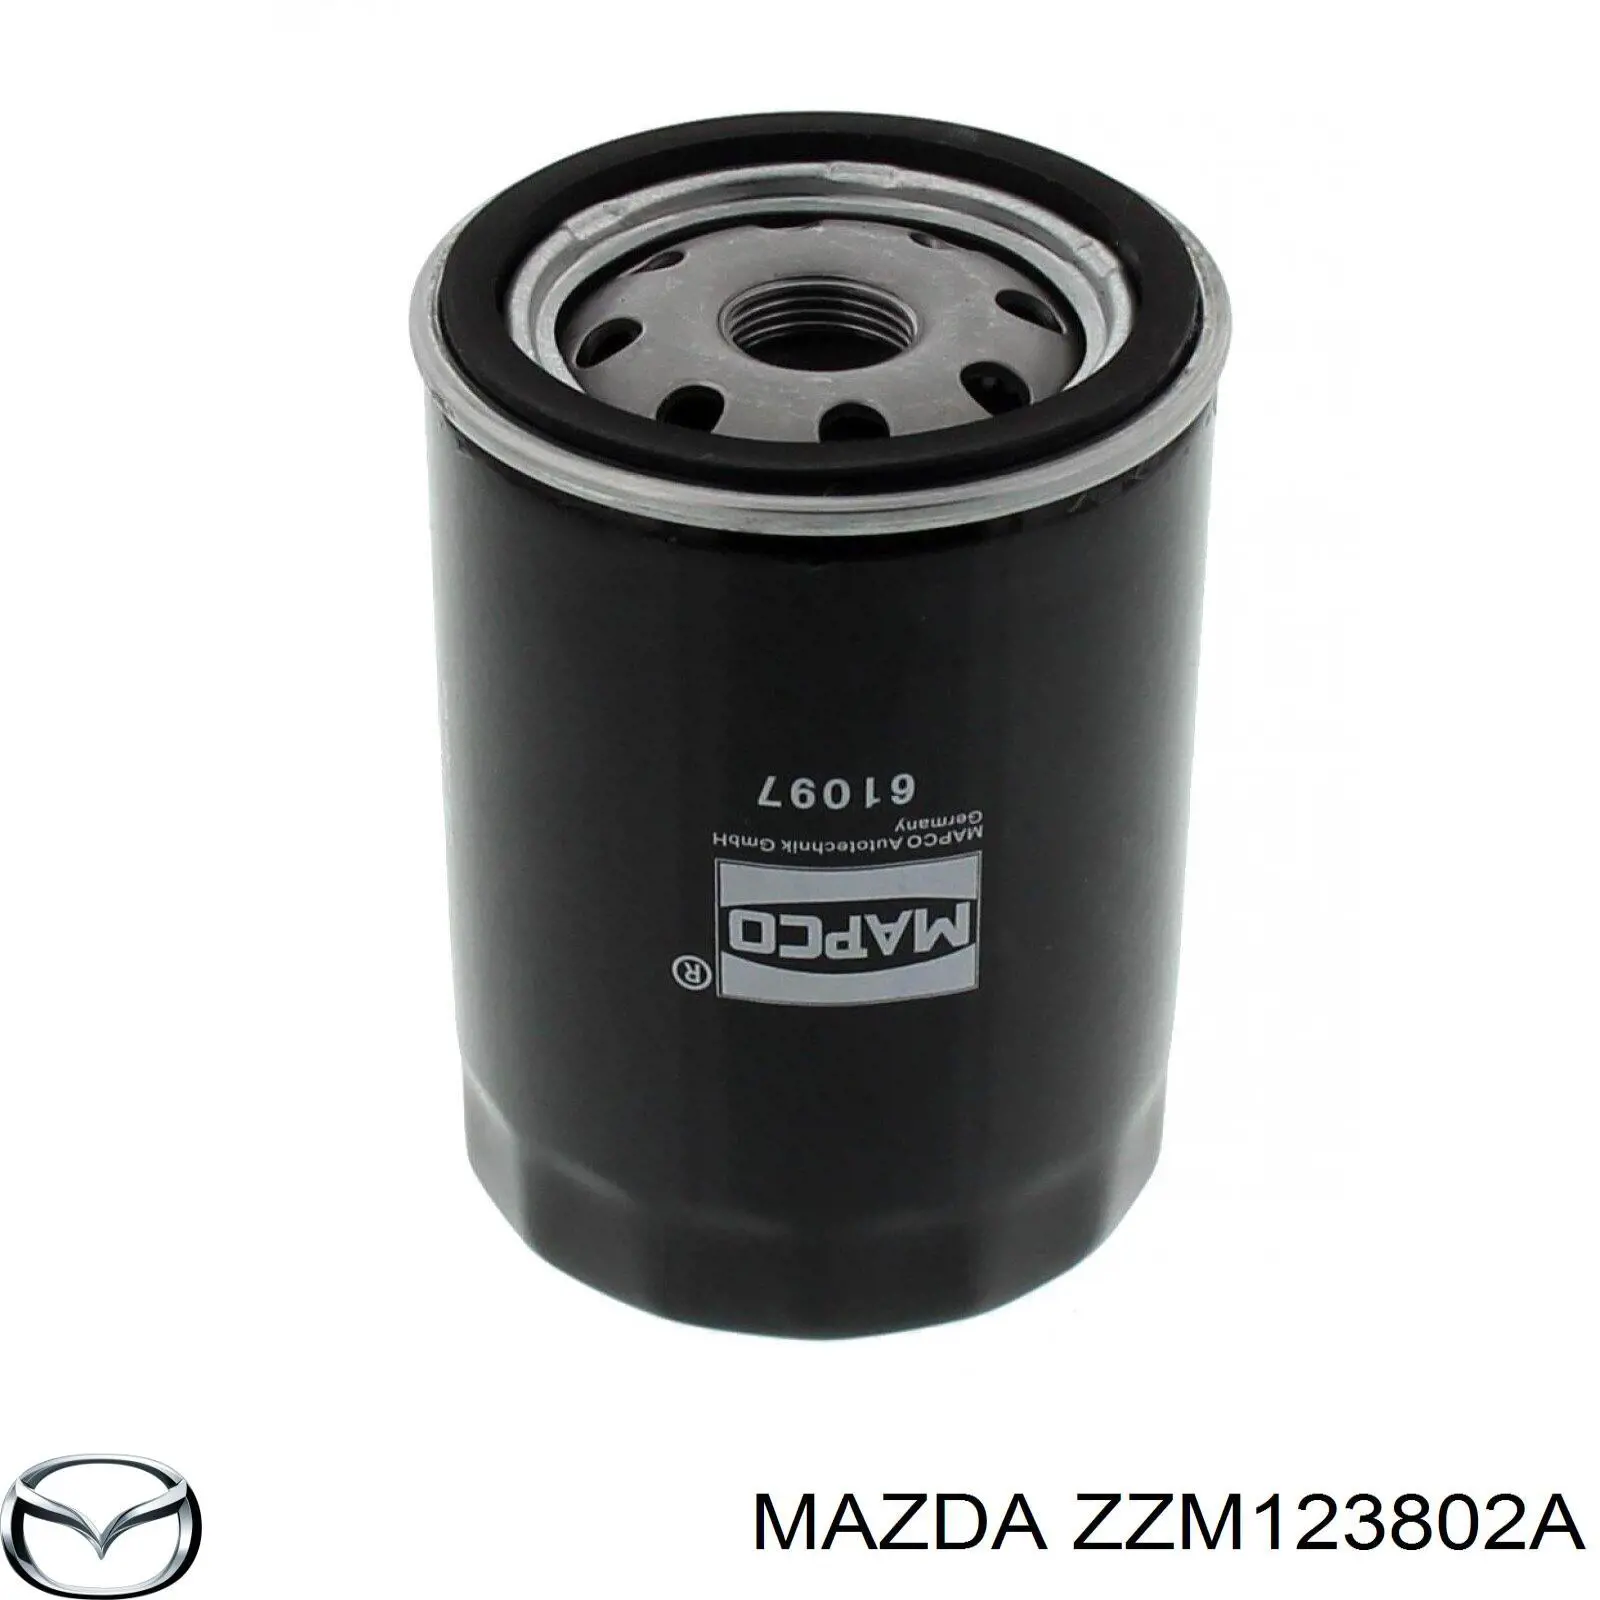 ZZM123802A Mazda filtro de aceite